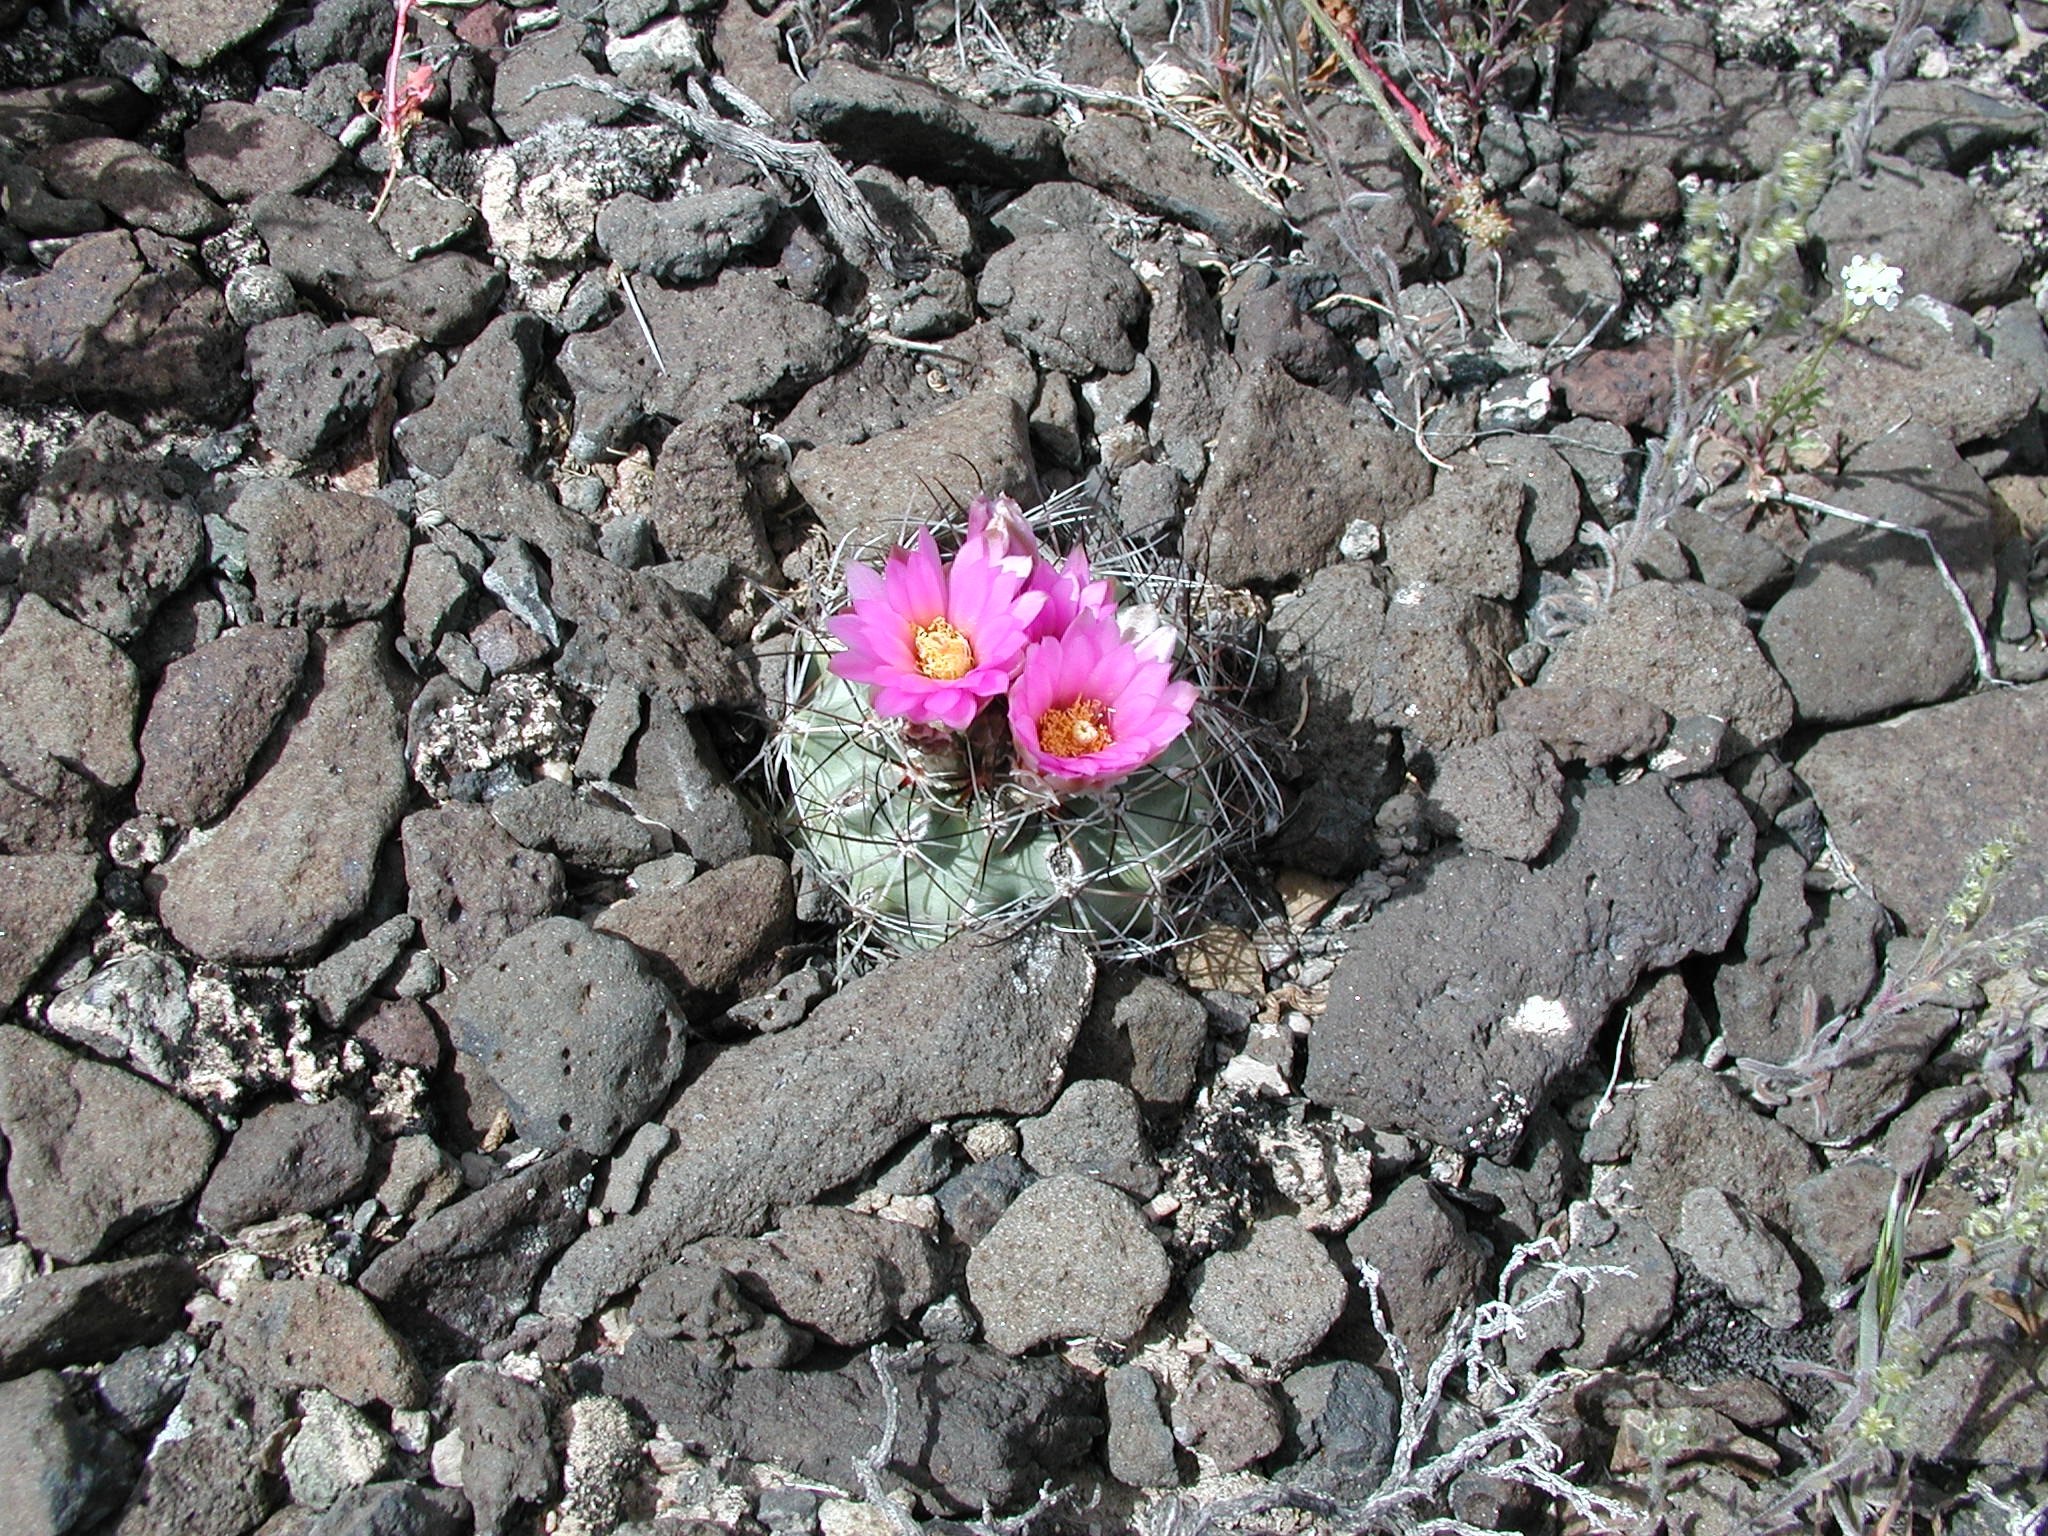 Colorado hookless cactus (6001742517)